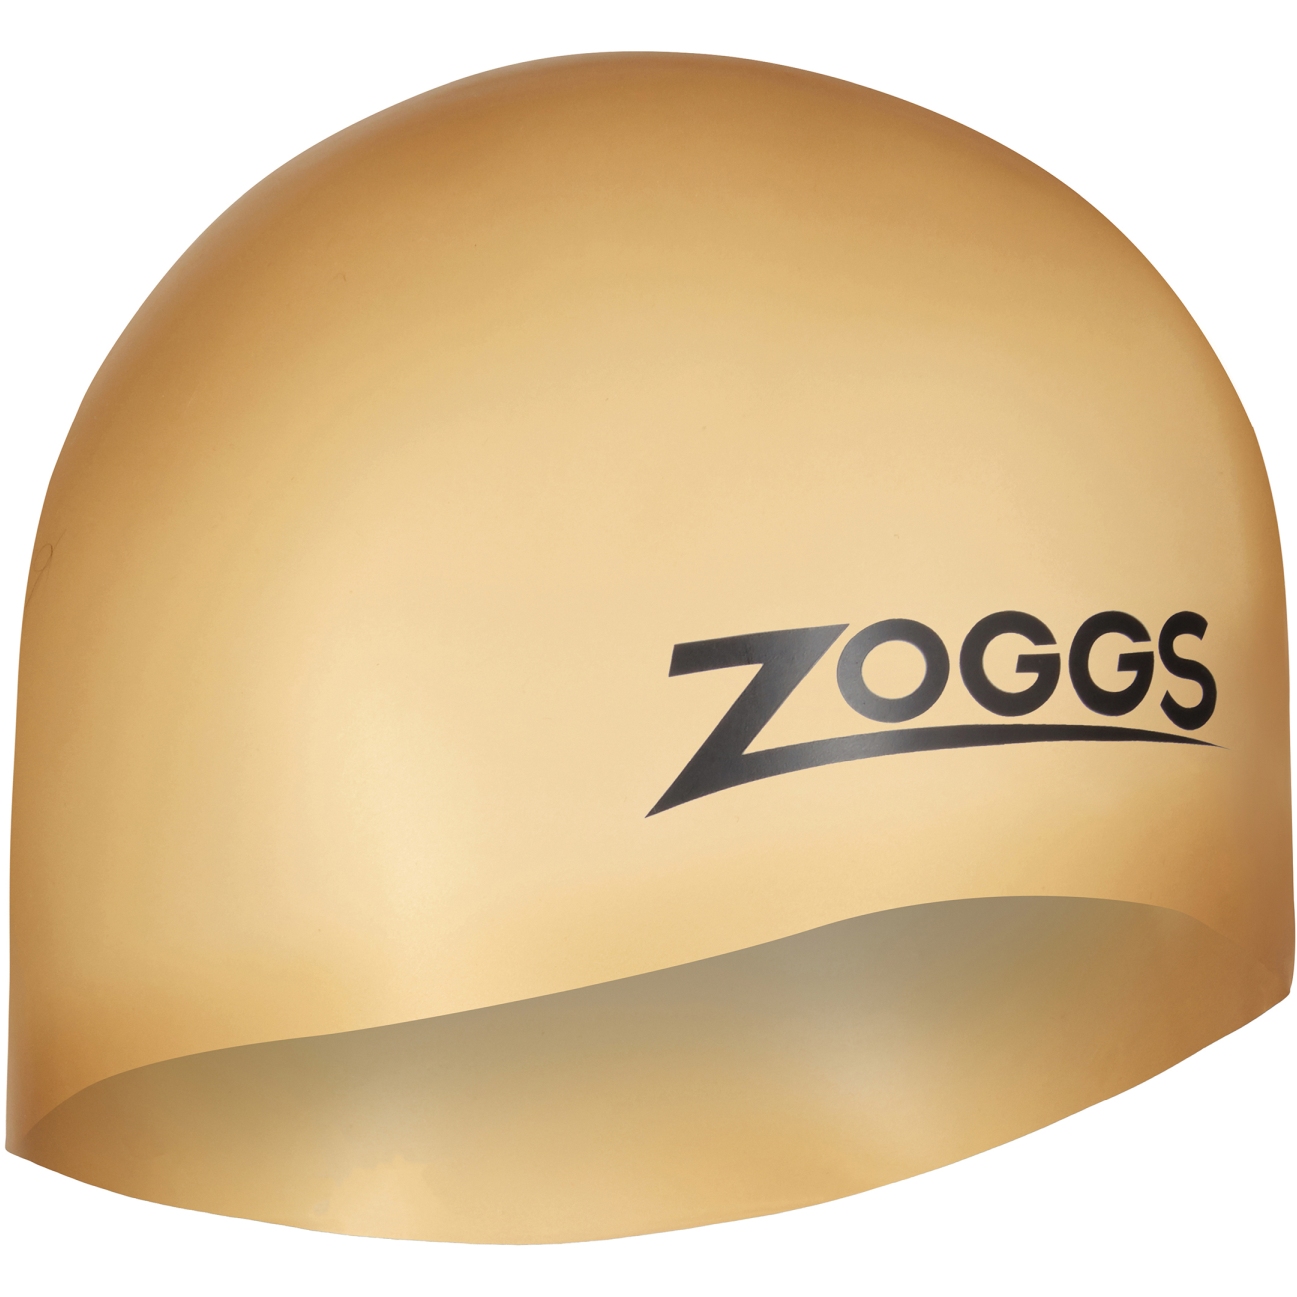 Produktbild von Zoggs Easy Fit Silicone Badekappe - gold